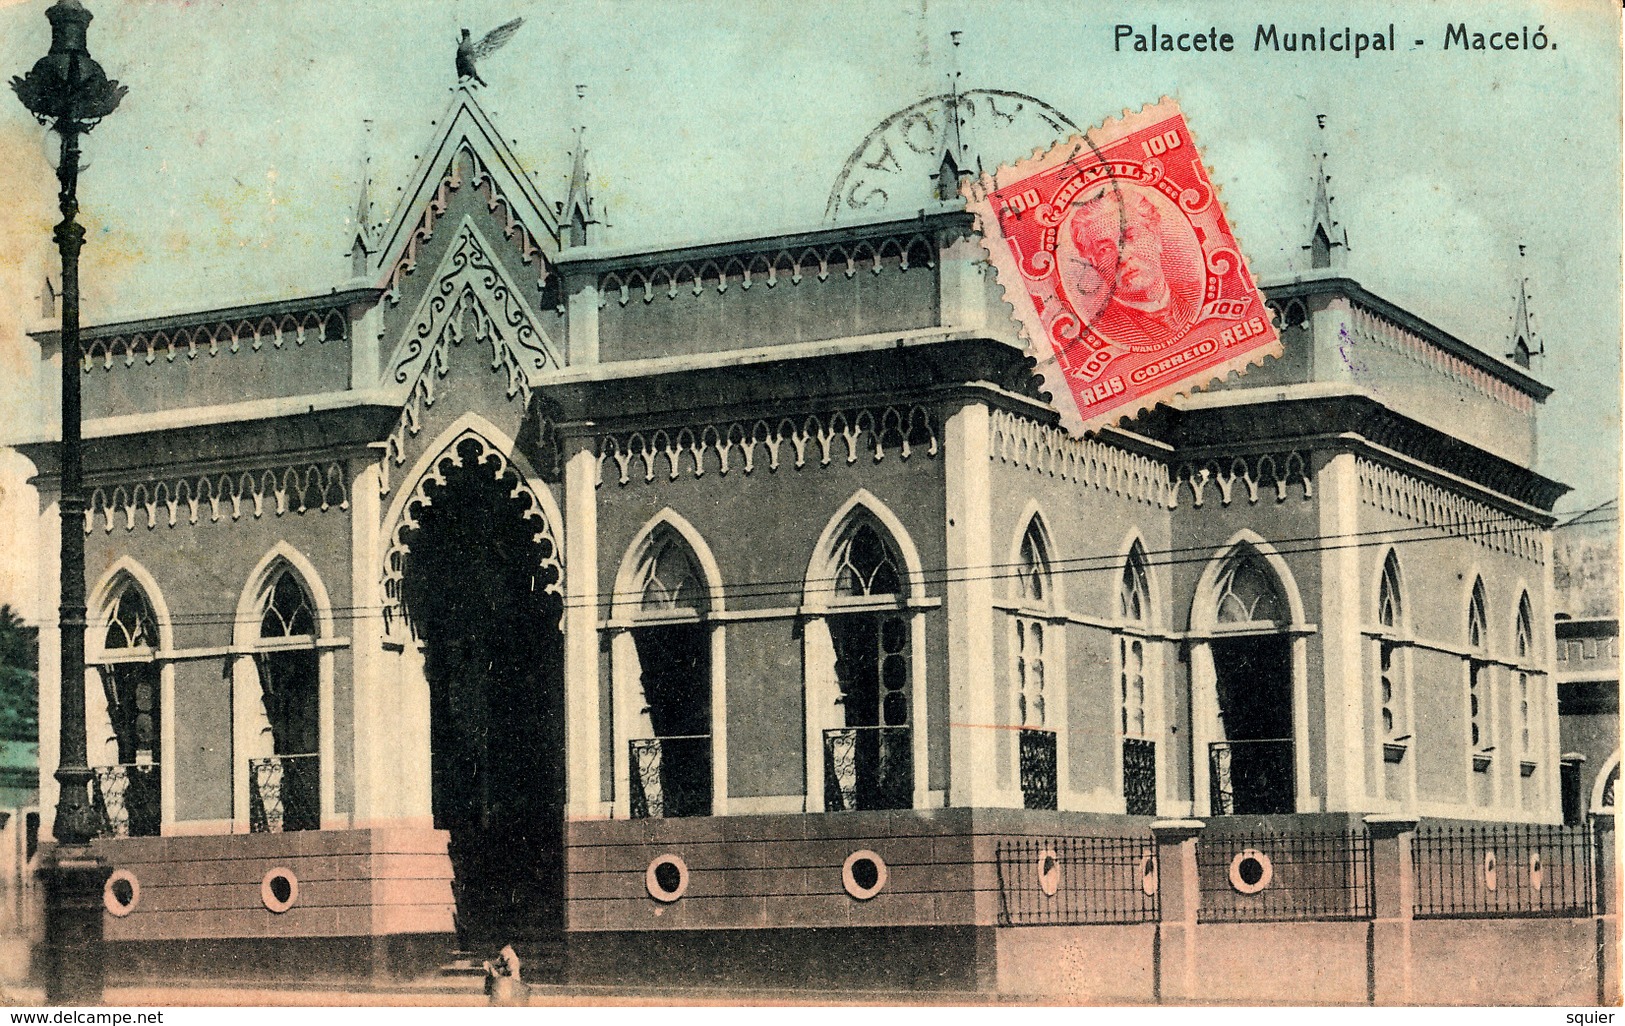 Palacete Municipal, Maceió - Maceió